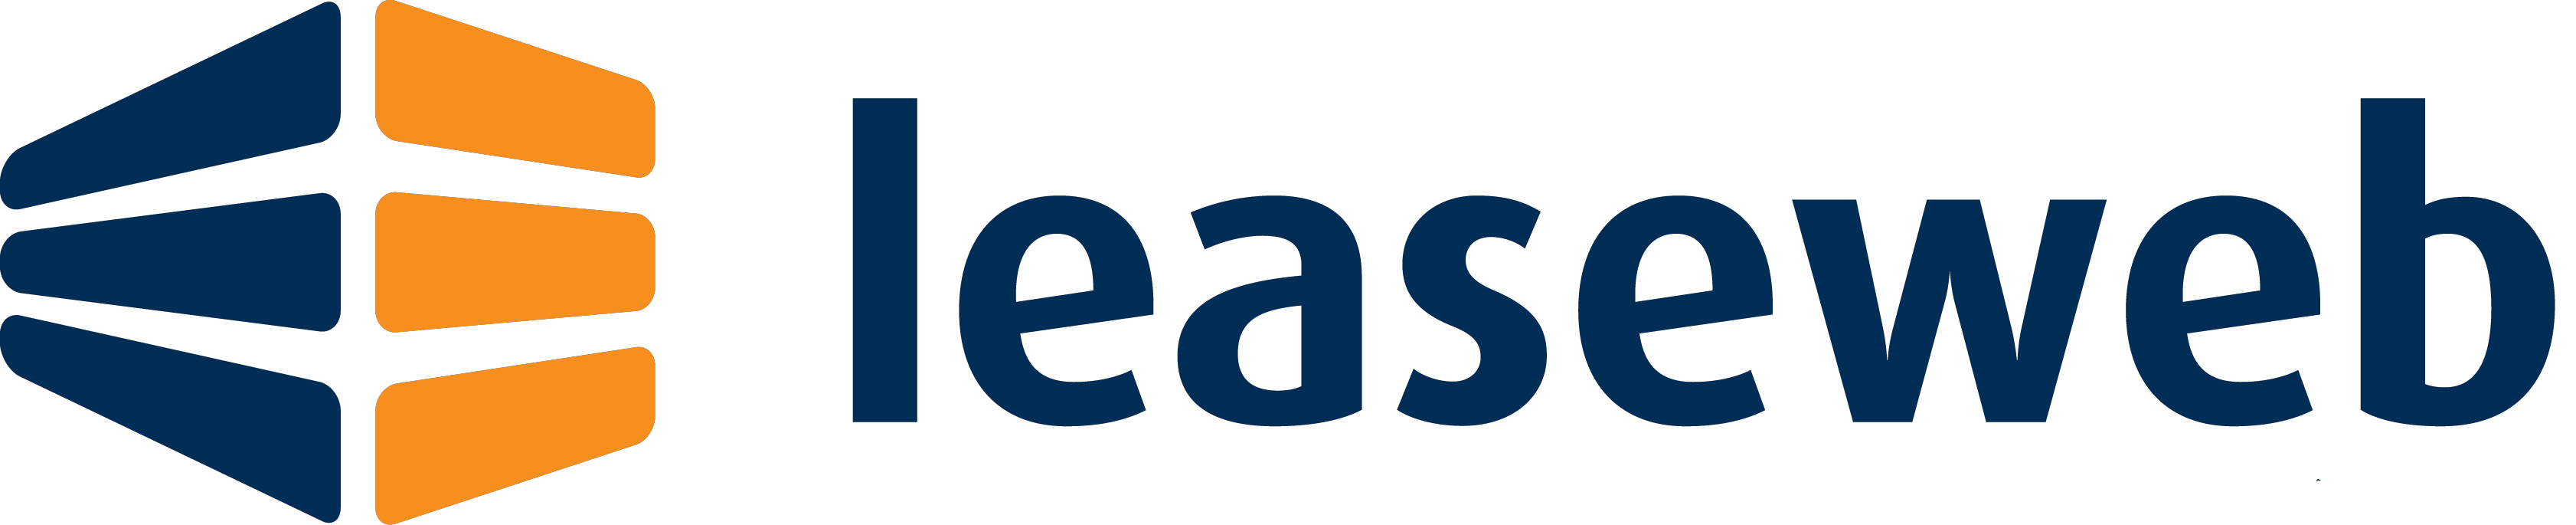 leaseweb_logo